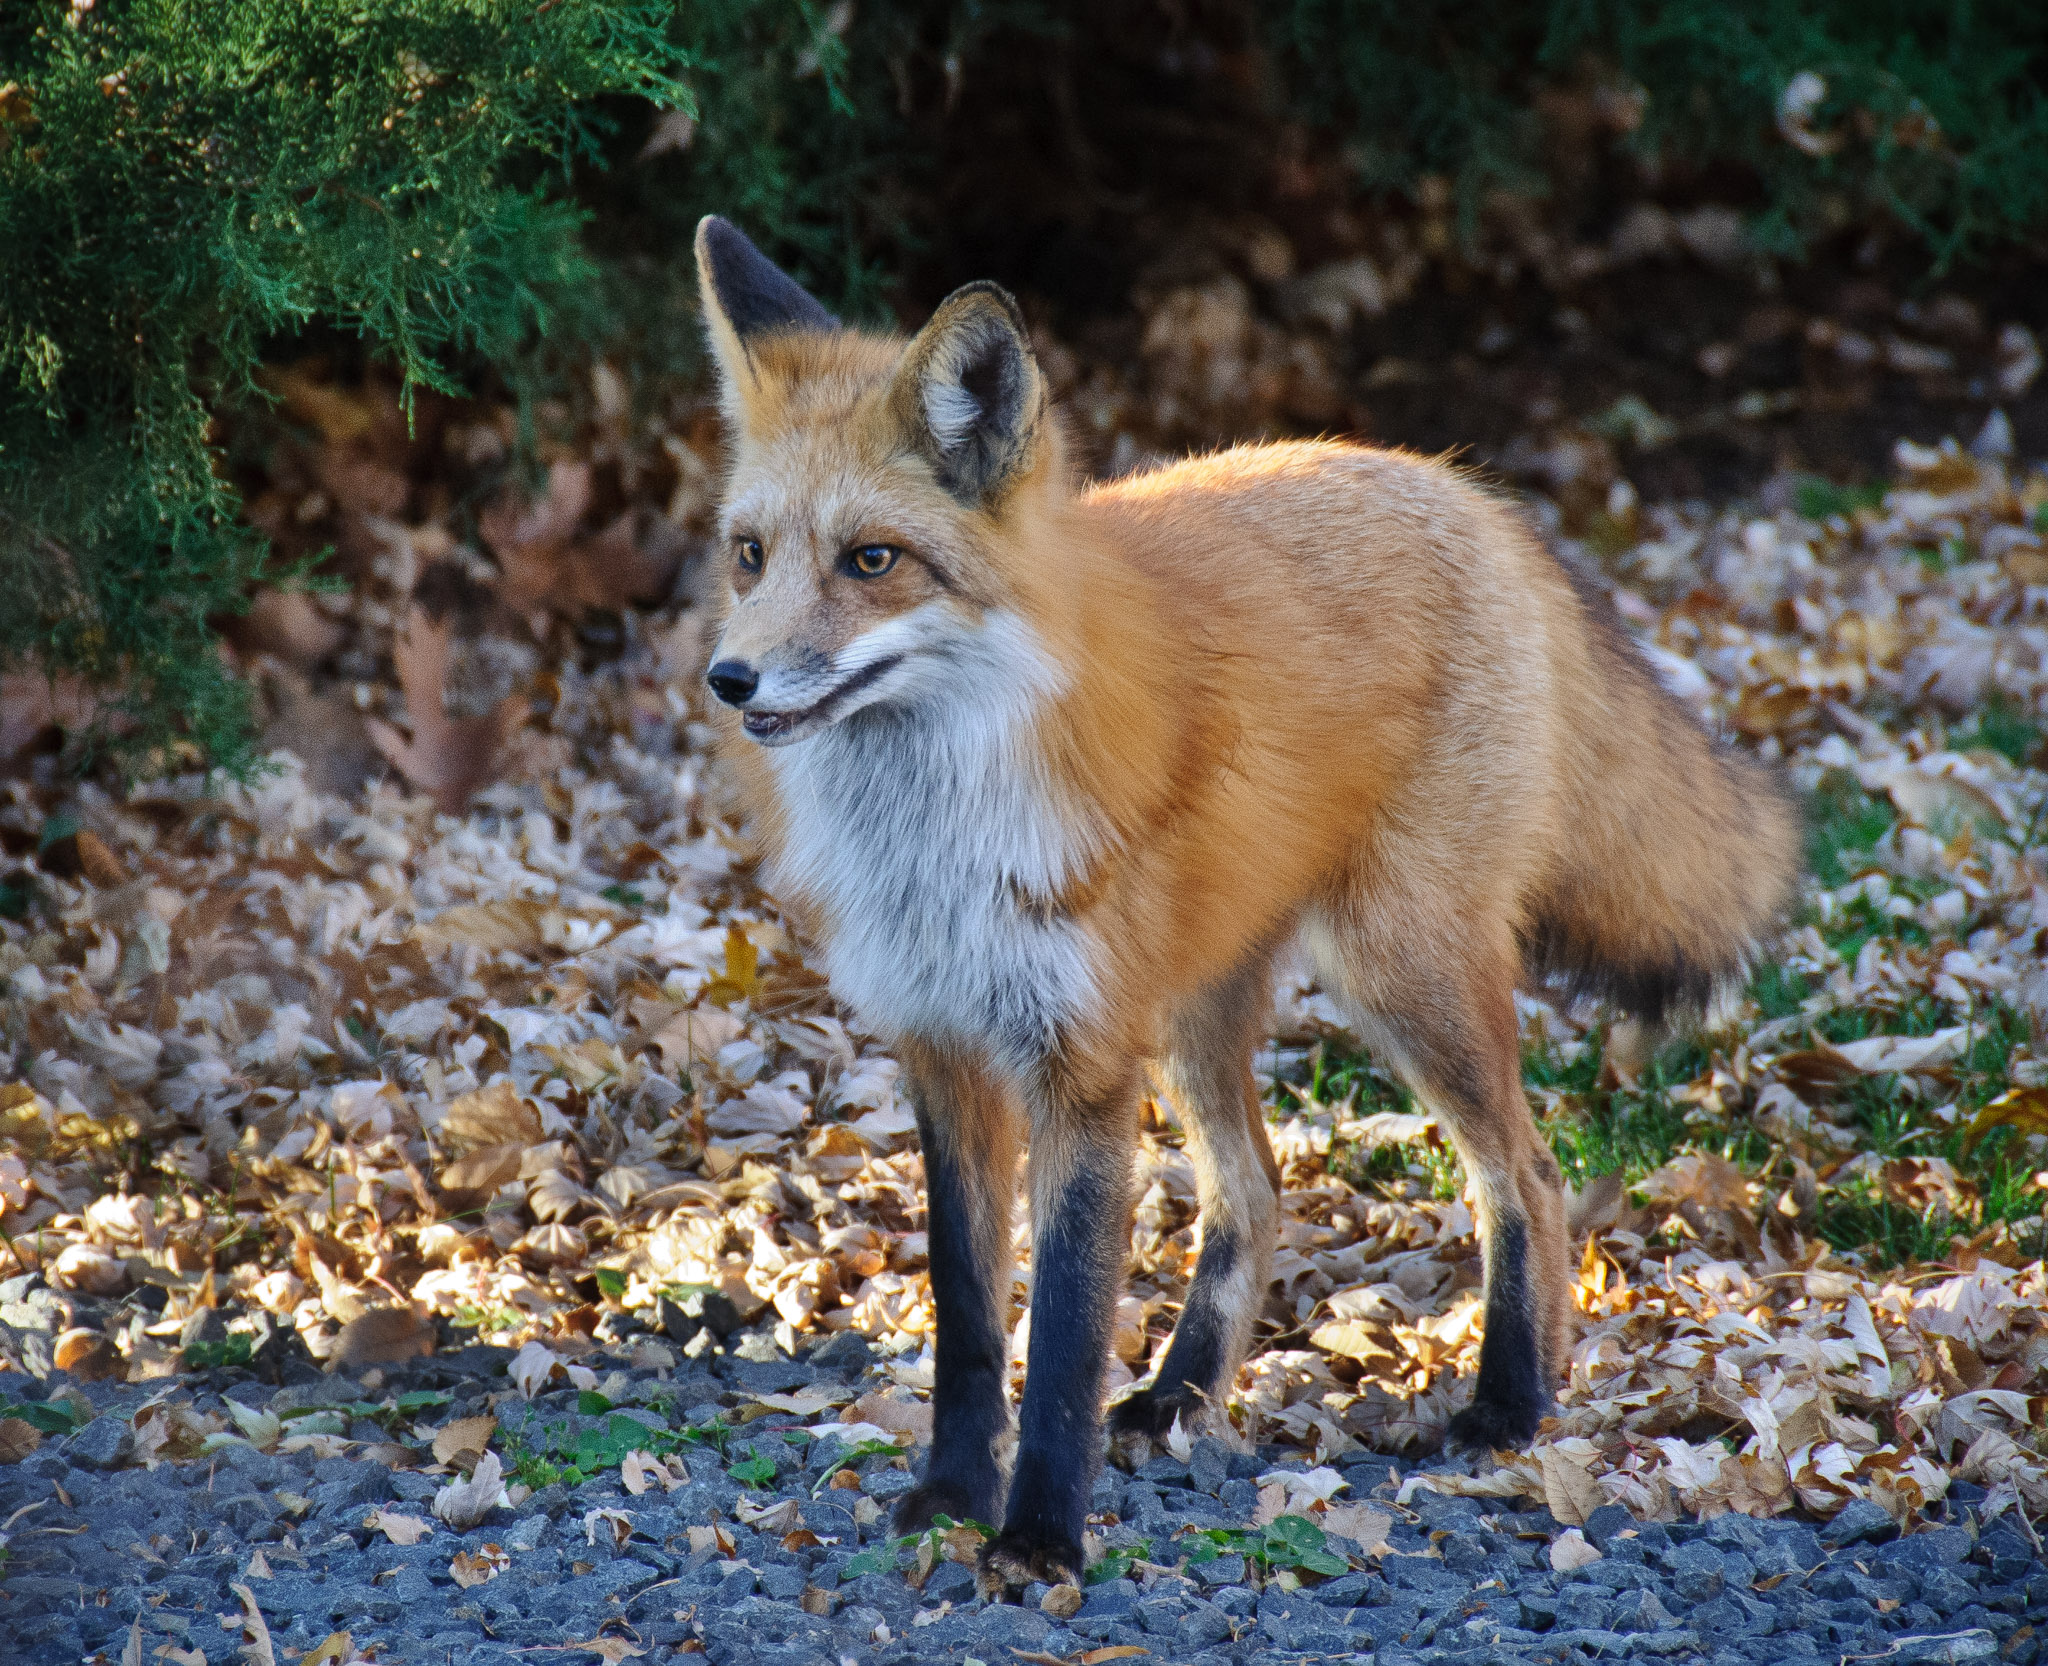 Urban Red Fox among Fall Leaves